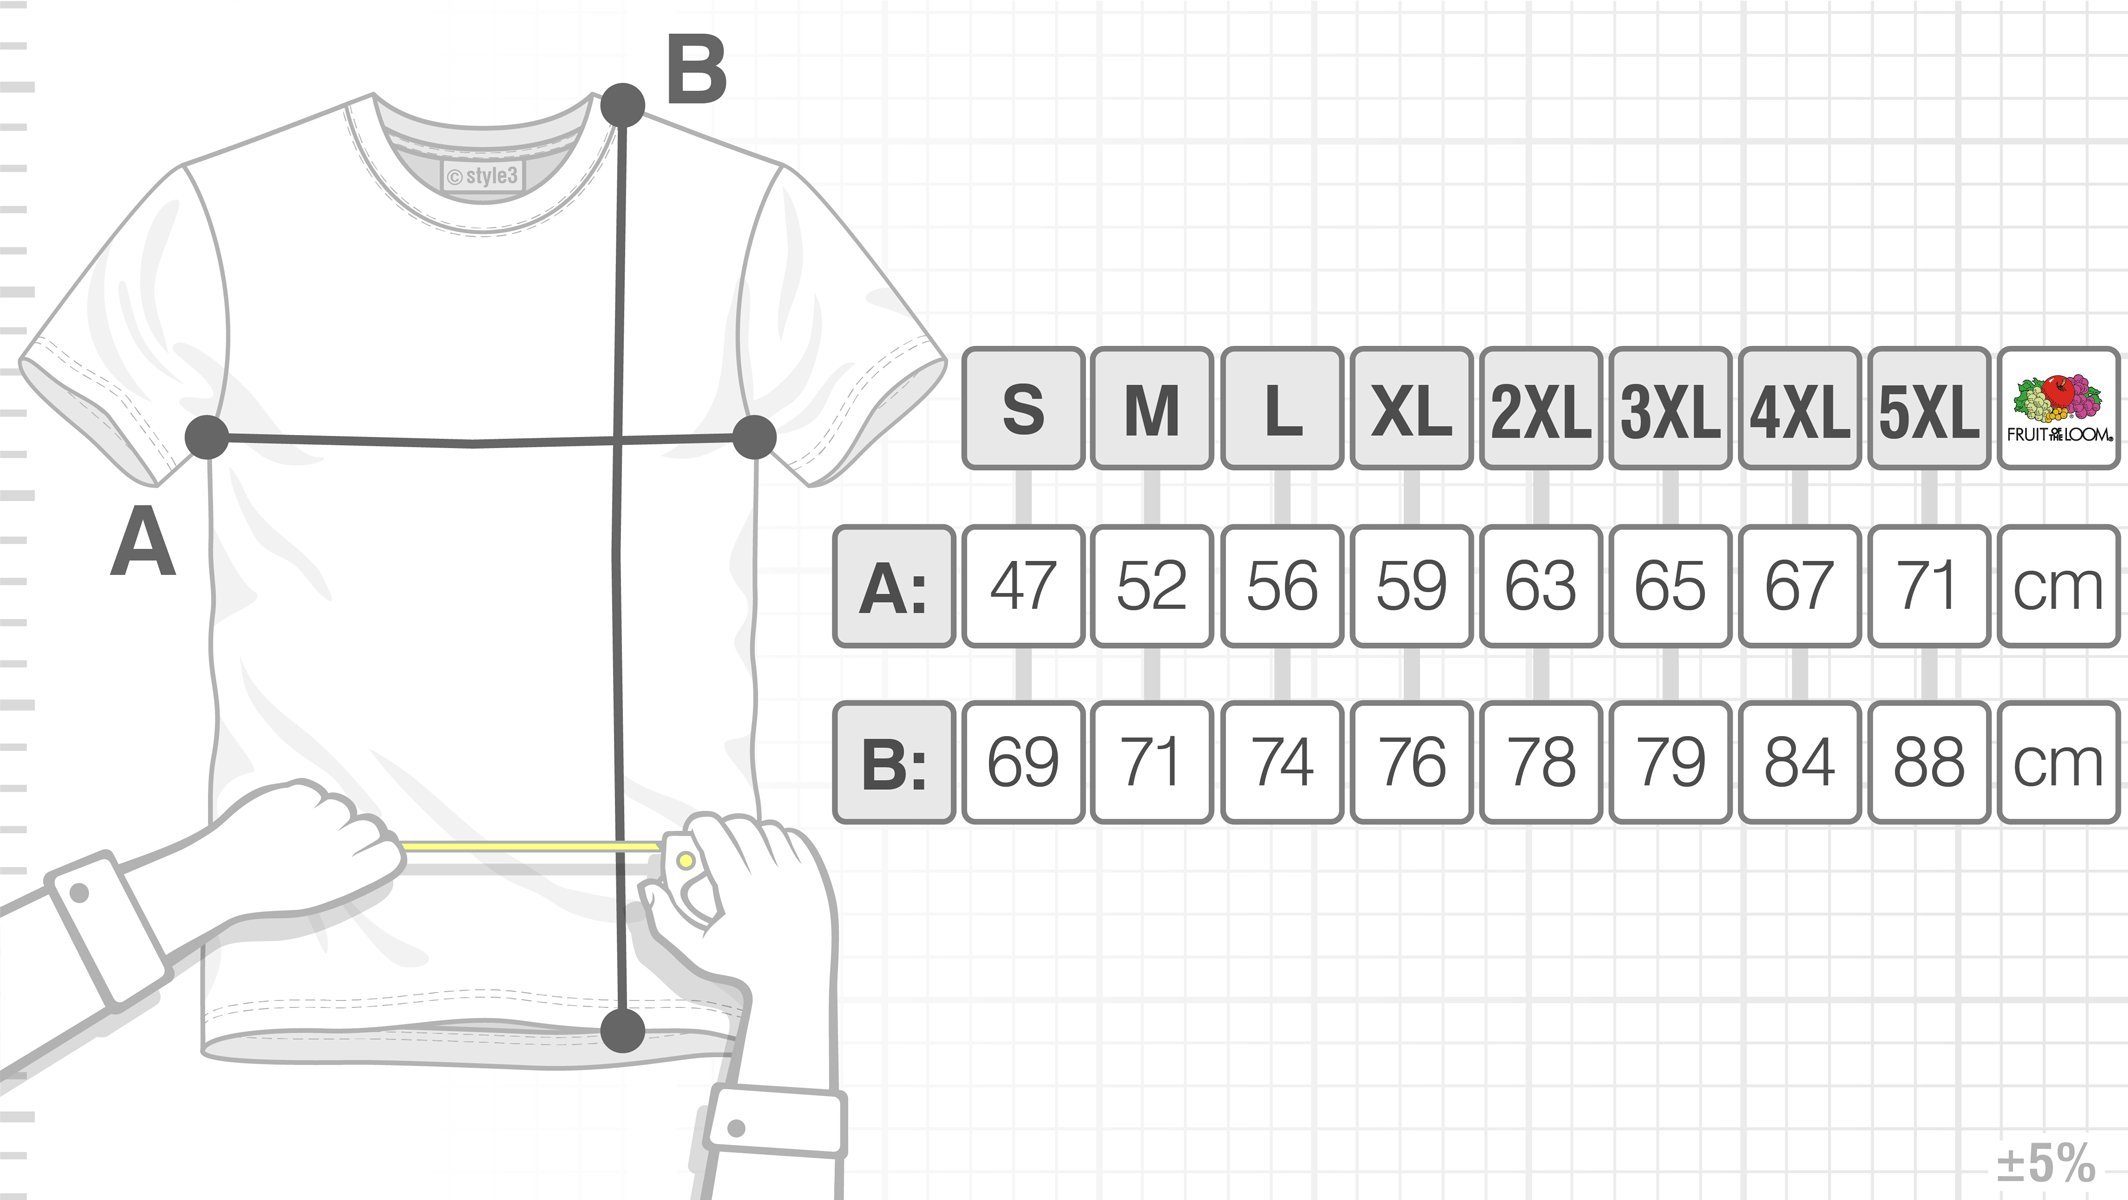 Periodensystem sheldon elemente T-Shirt Print-Shirt cooper uni style3 chemie big Herren theory weiß schule bang